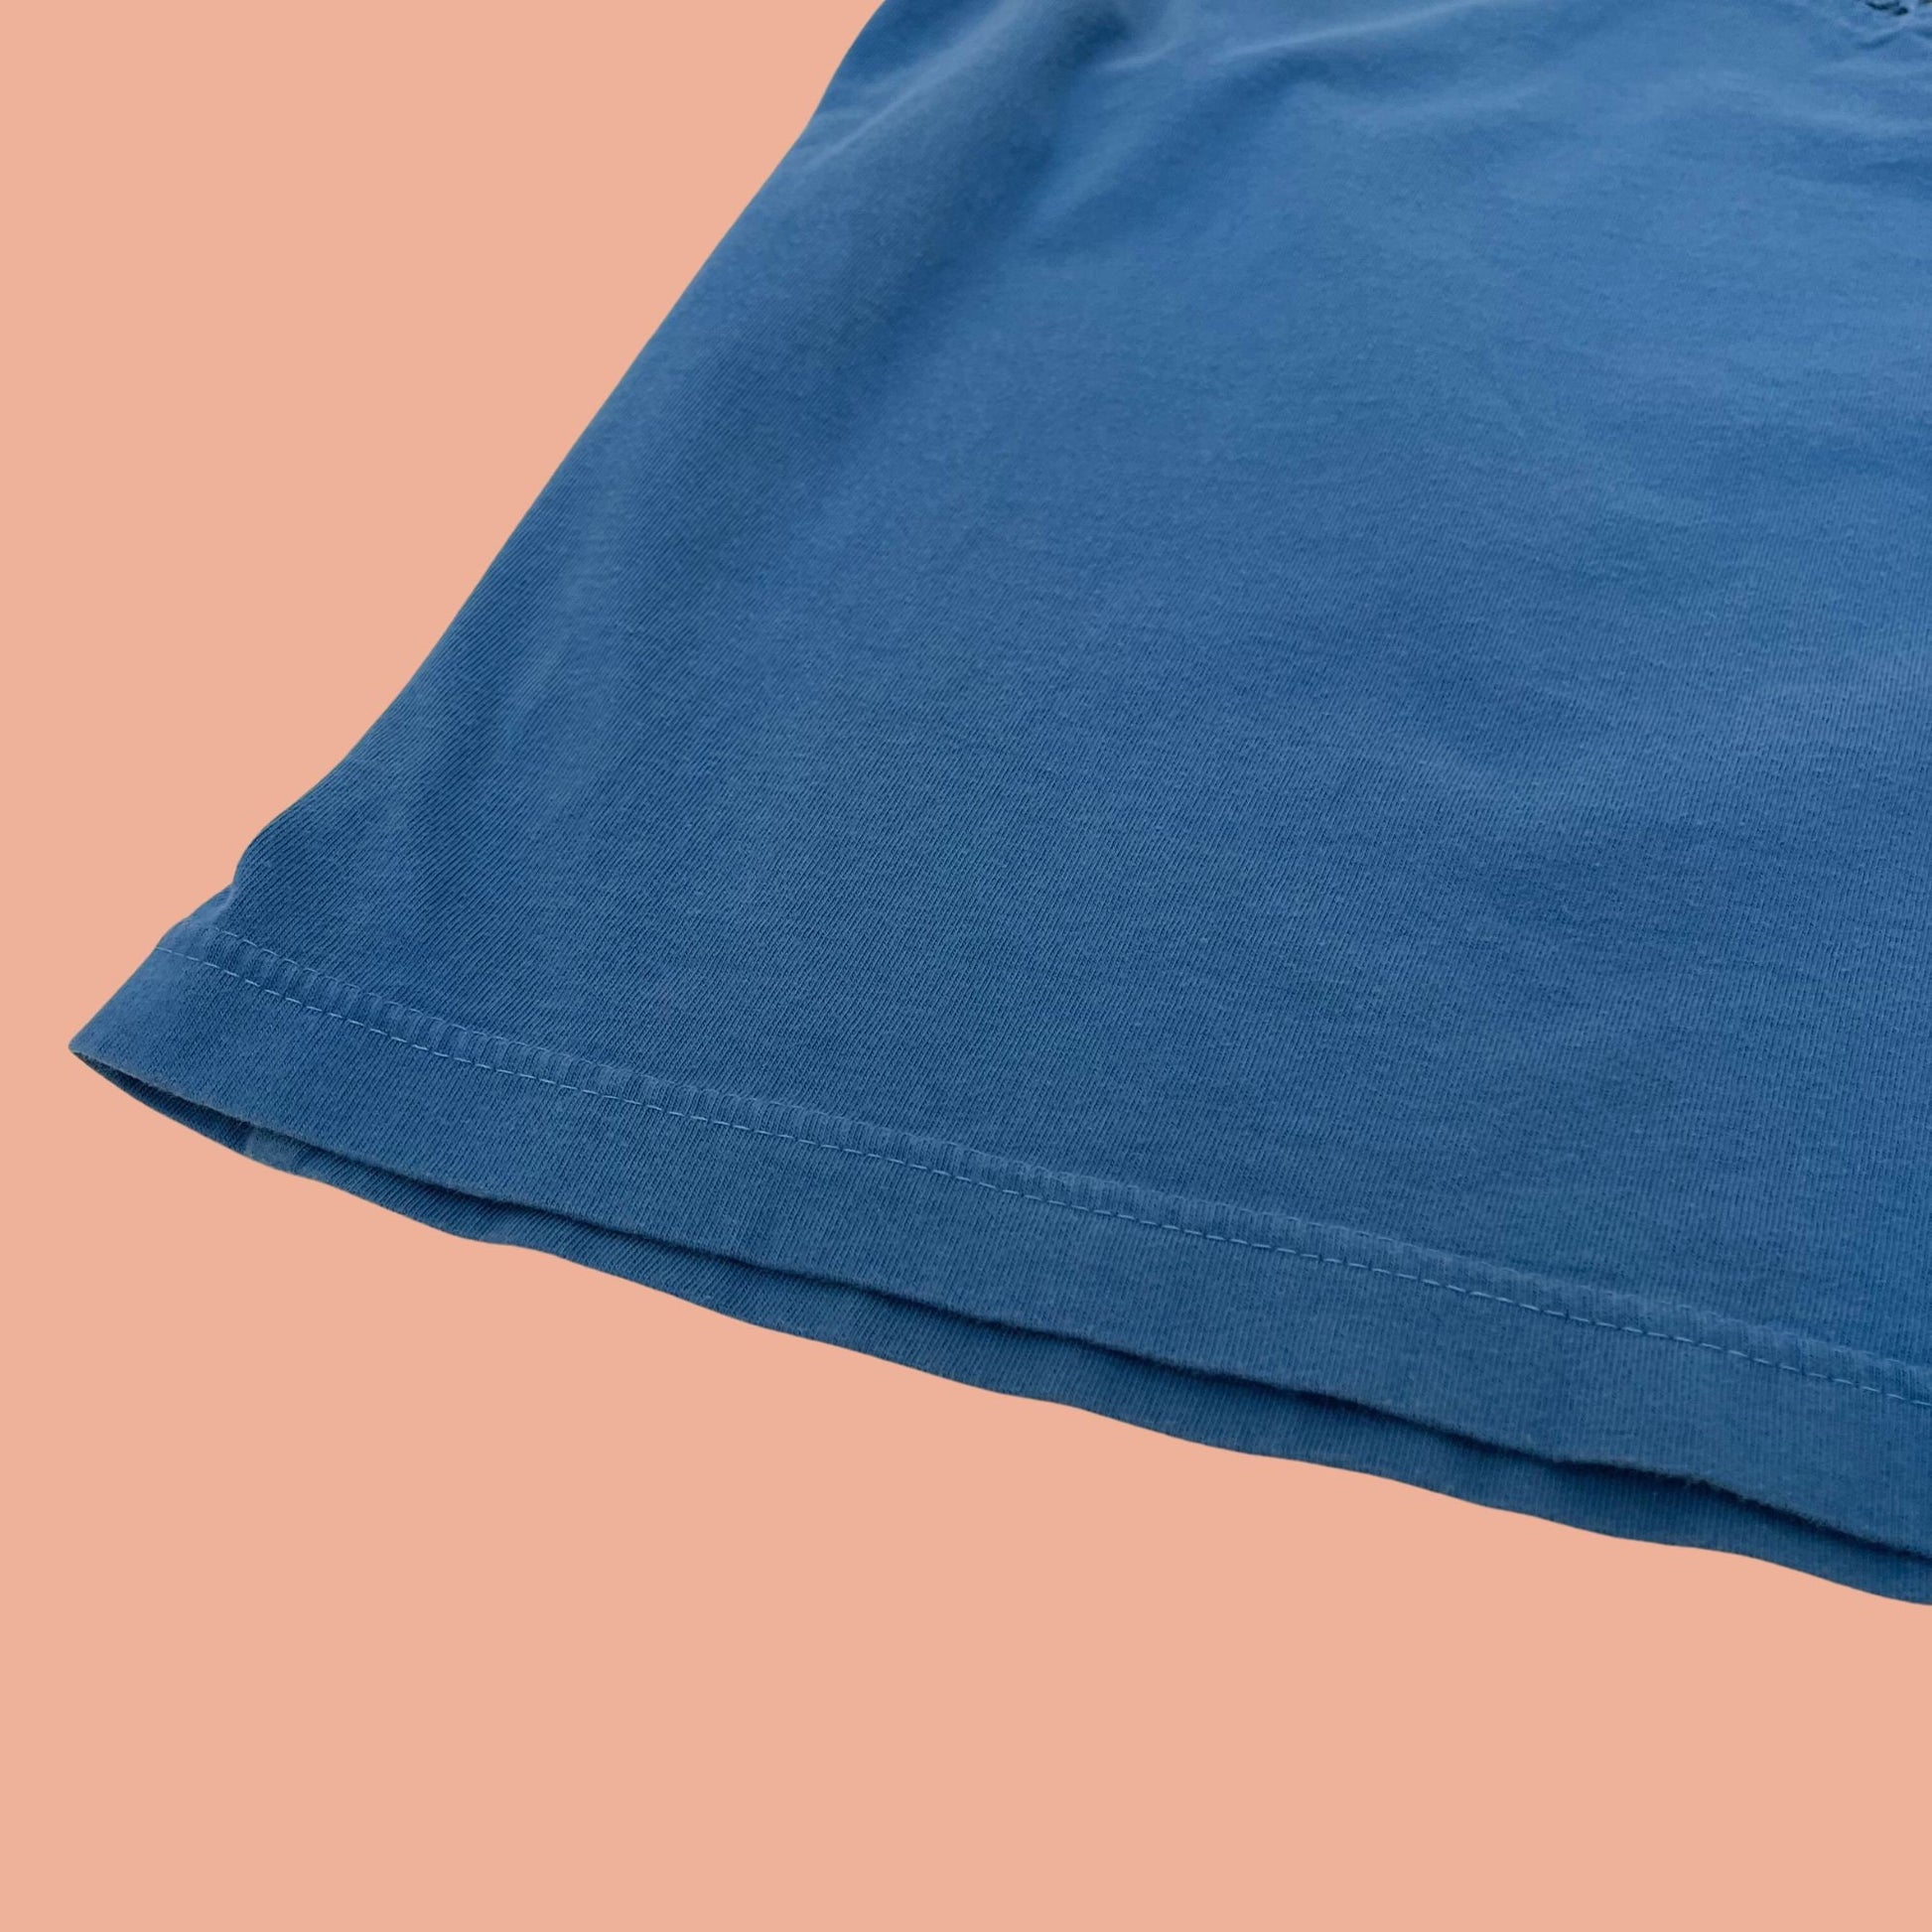 90s women's blue tank top with lace and sequins, vintage t shirt by Lemon Grass Studio, medium 1990s women's short sleeve shirt